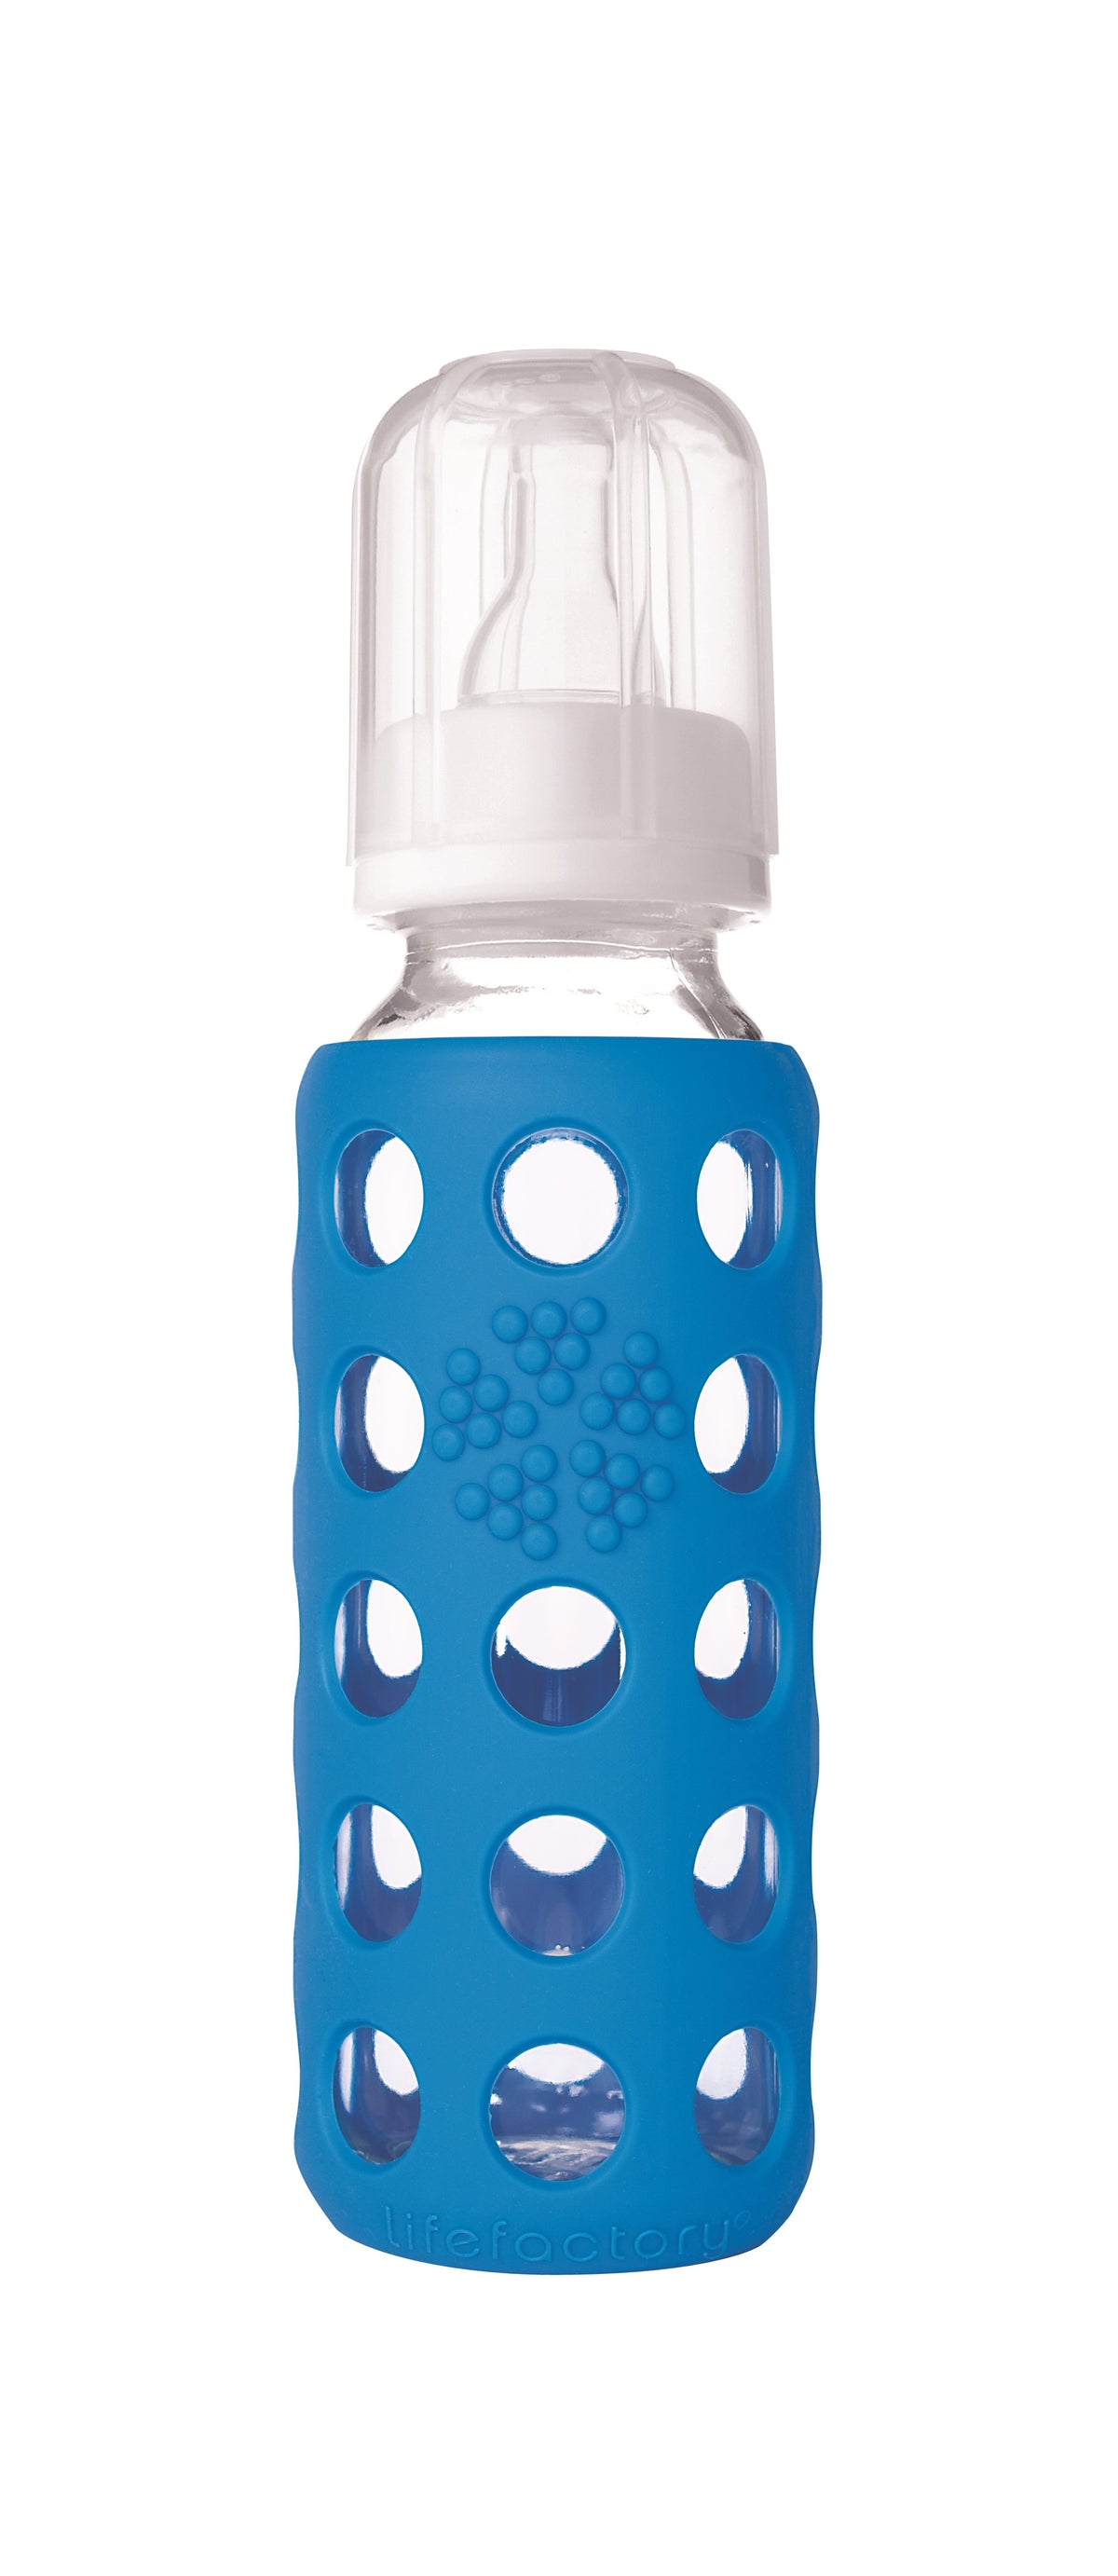 Lifefactory 110008 Baby Glass Water Bottle, Ocean, 9 Oz